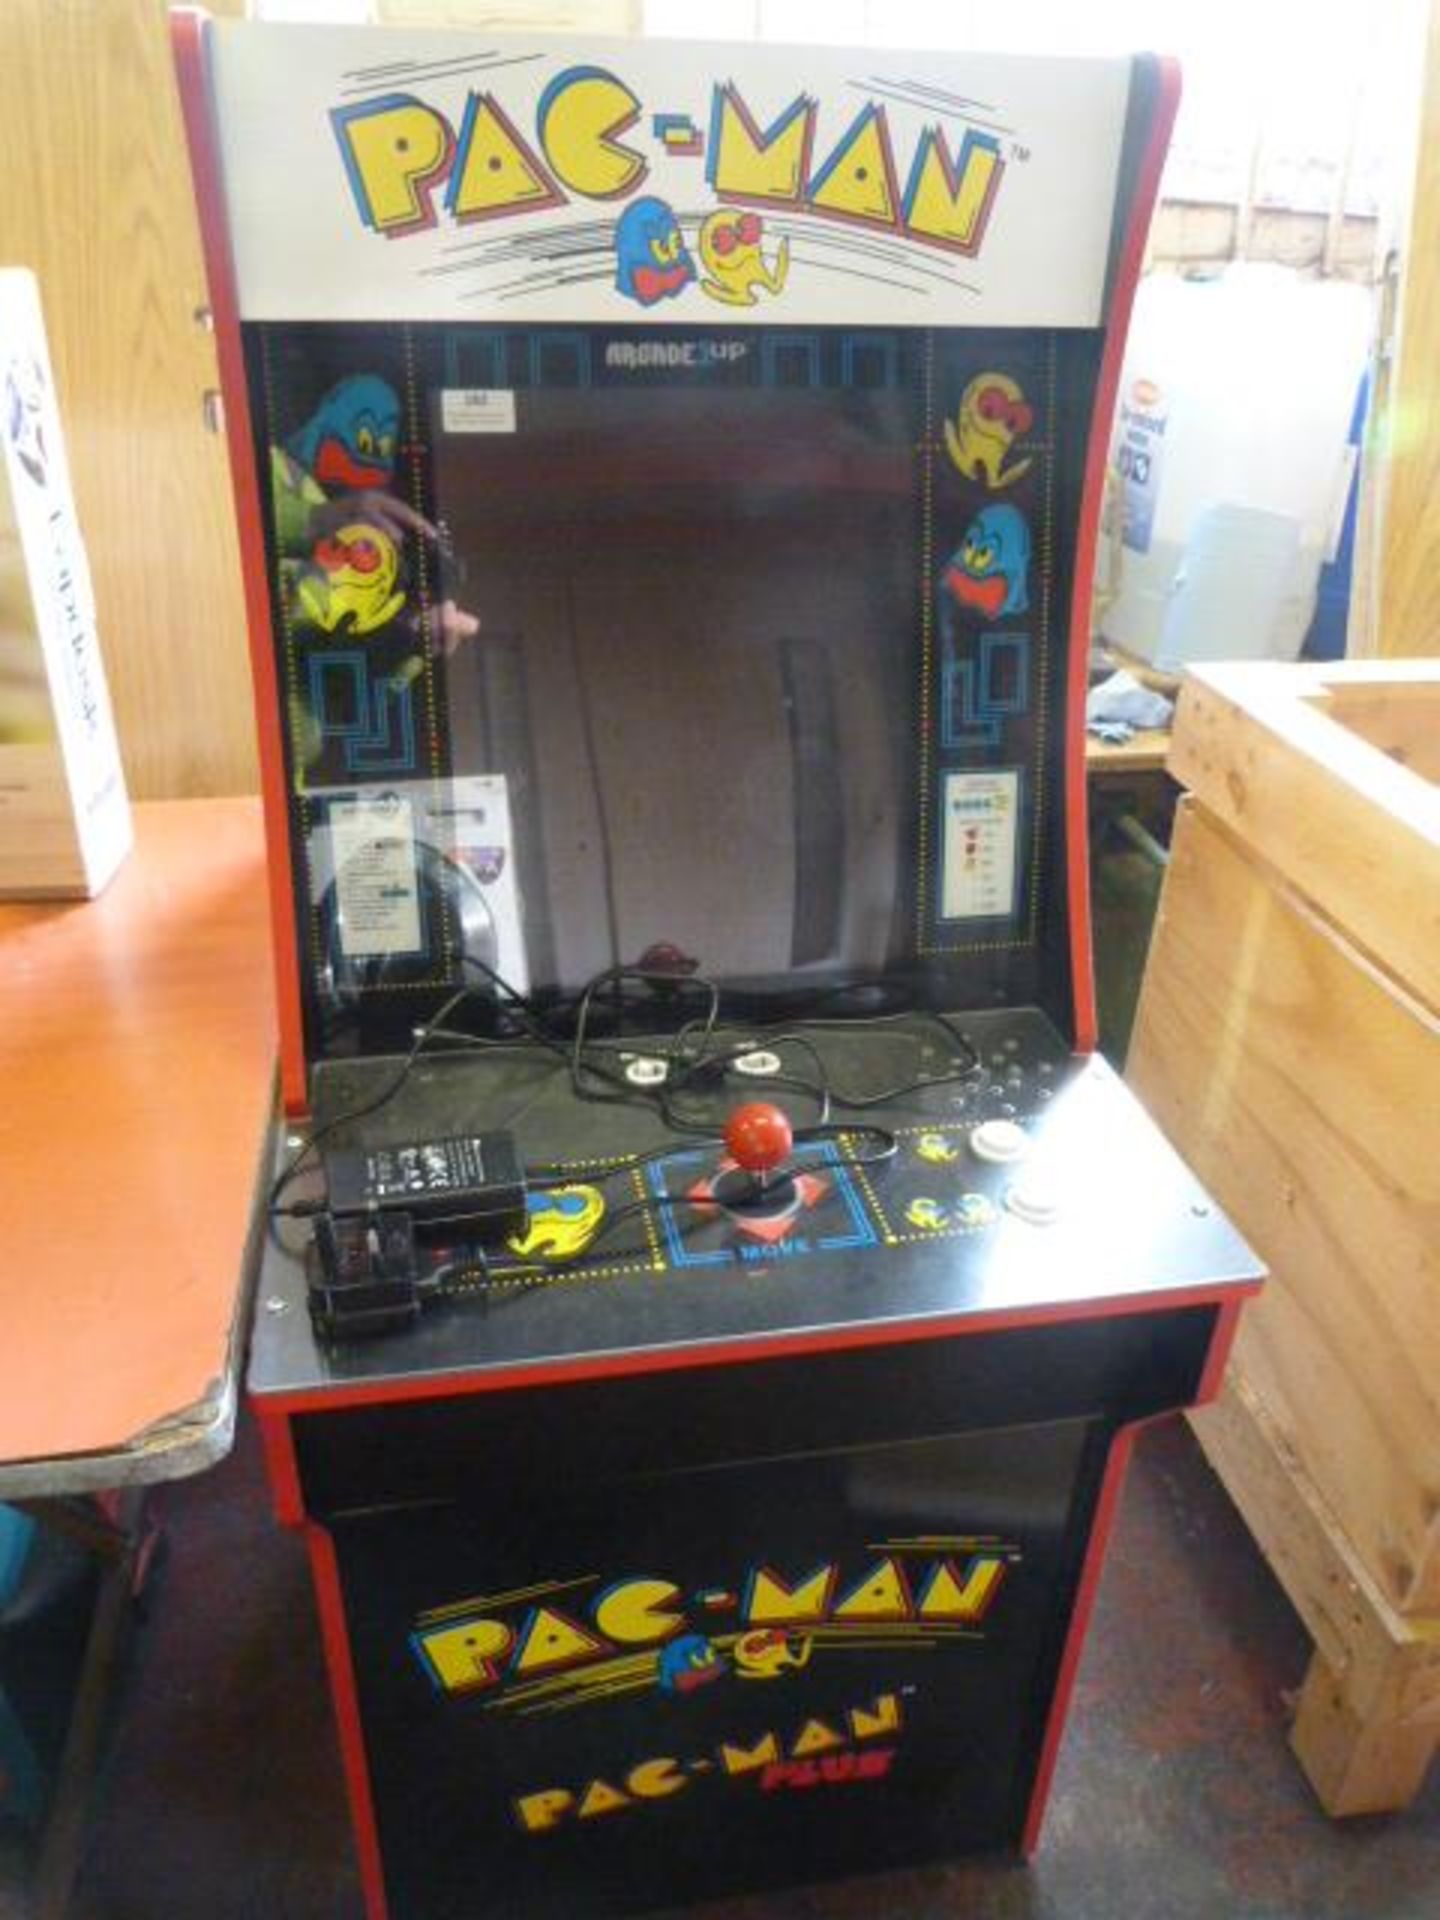 *Sanboro Arcade Game Pac-Man +